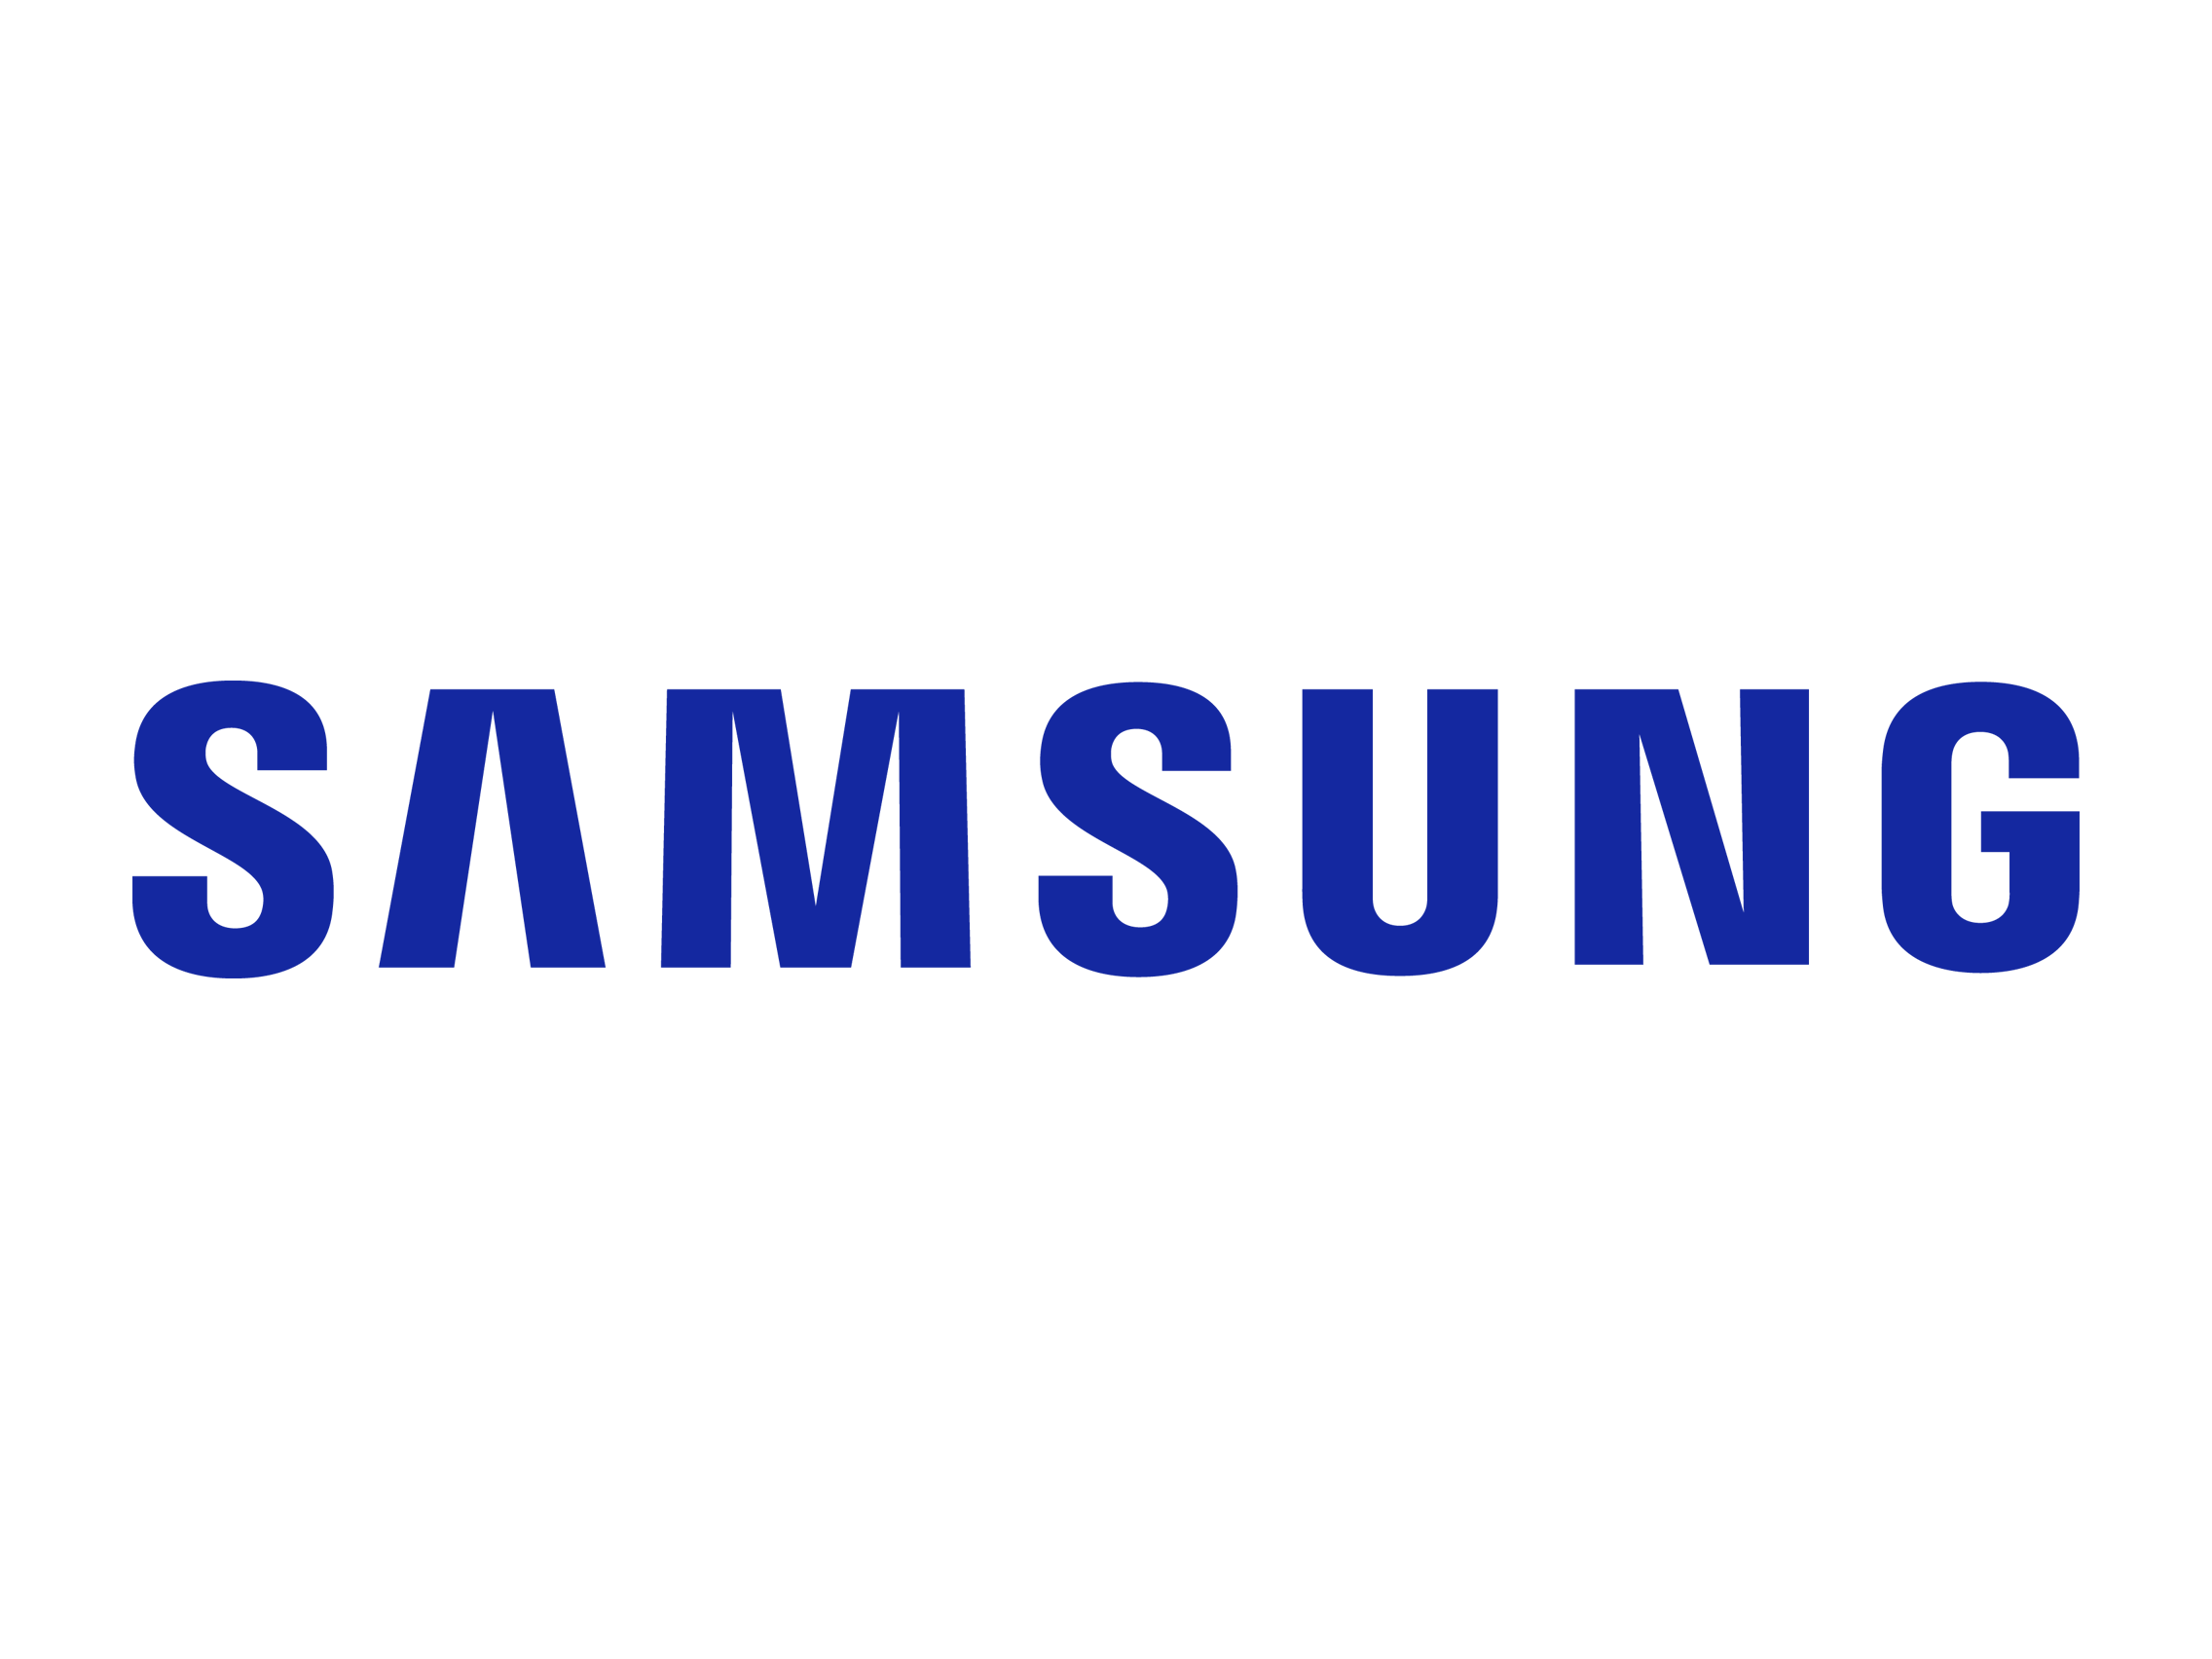 Блок проявки Samsung оригинал для Samsung SL-X7400/7500/7600, пурпурный (JC96-12518A)